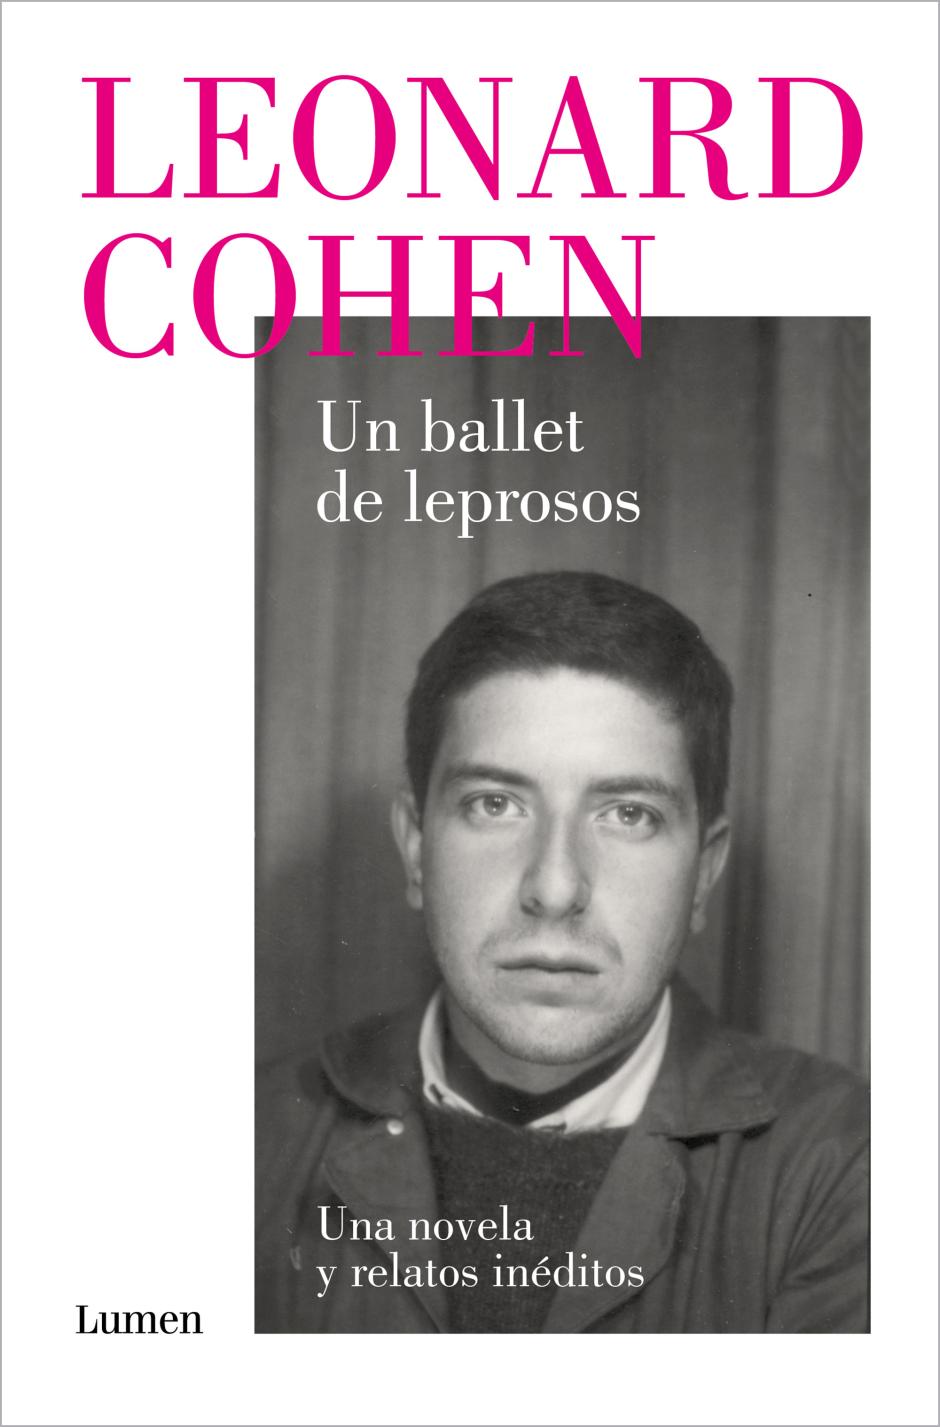 El libro de Leonard Cohen 'Un ballet de leprosos', publicado póstumamente